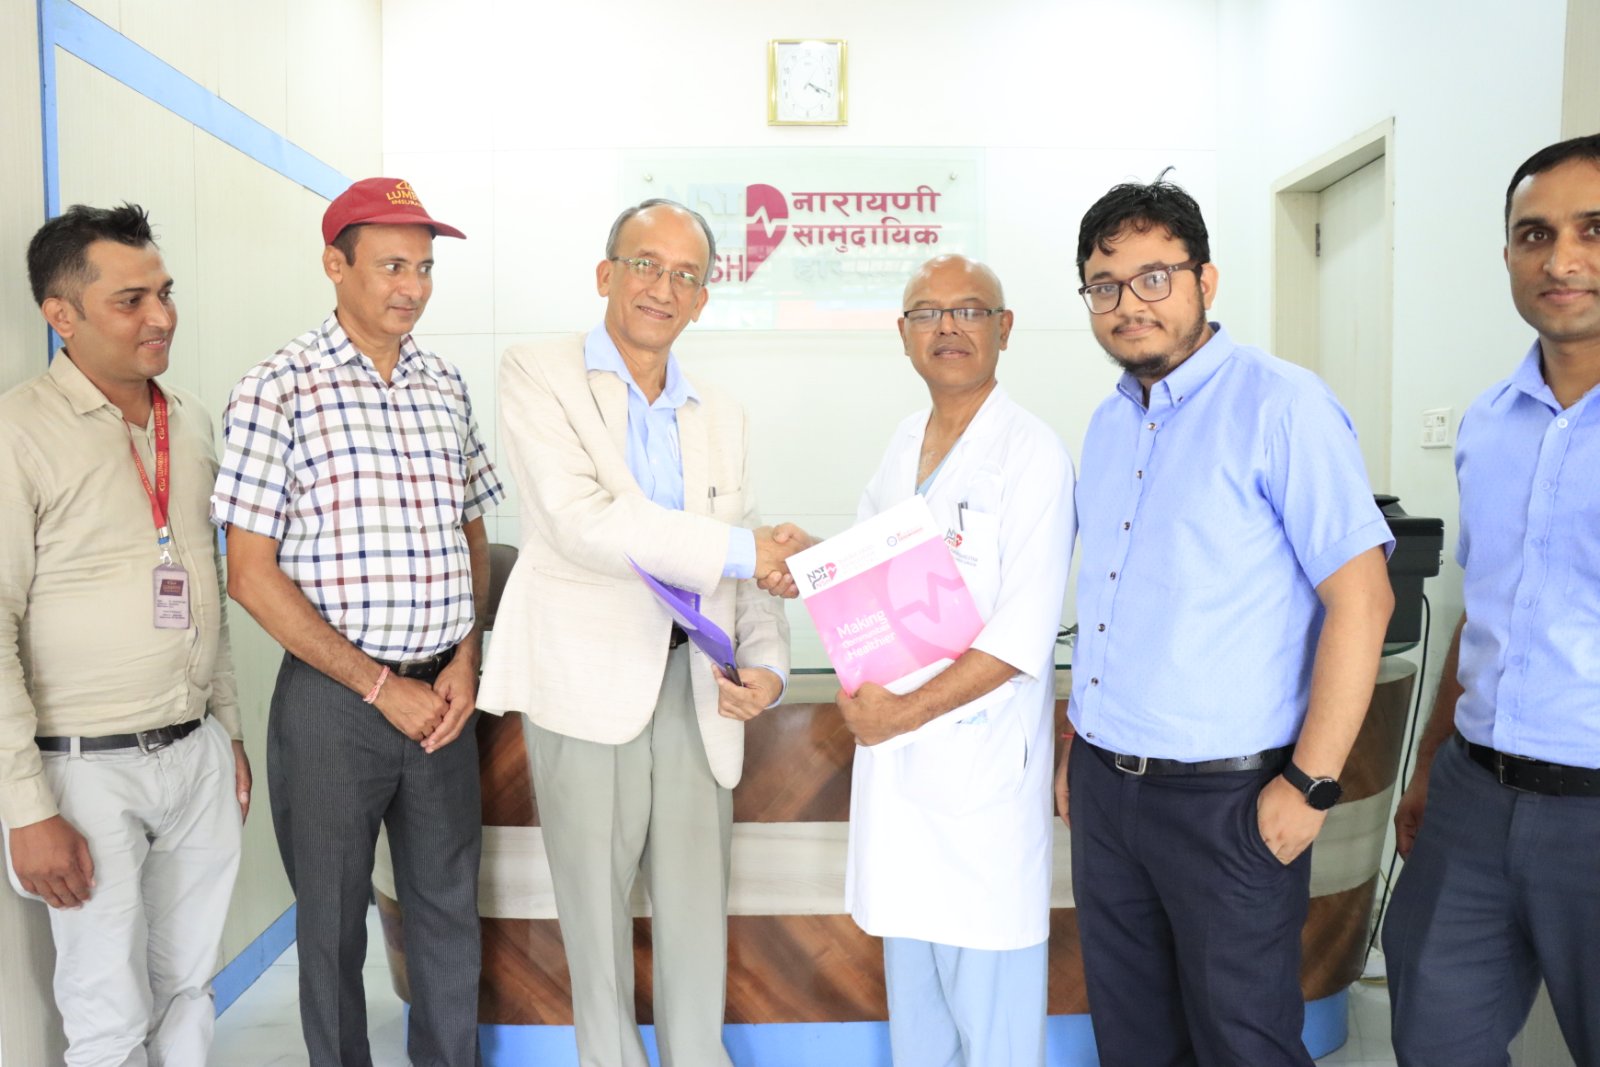 लुम्बिनी जनरल इन्स्योरेन्स र नारायणी समुदायिक अस्पतालबीच सम्झौता